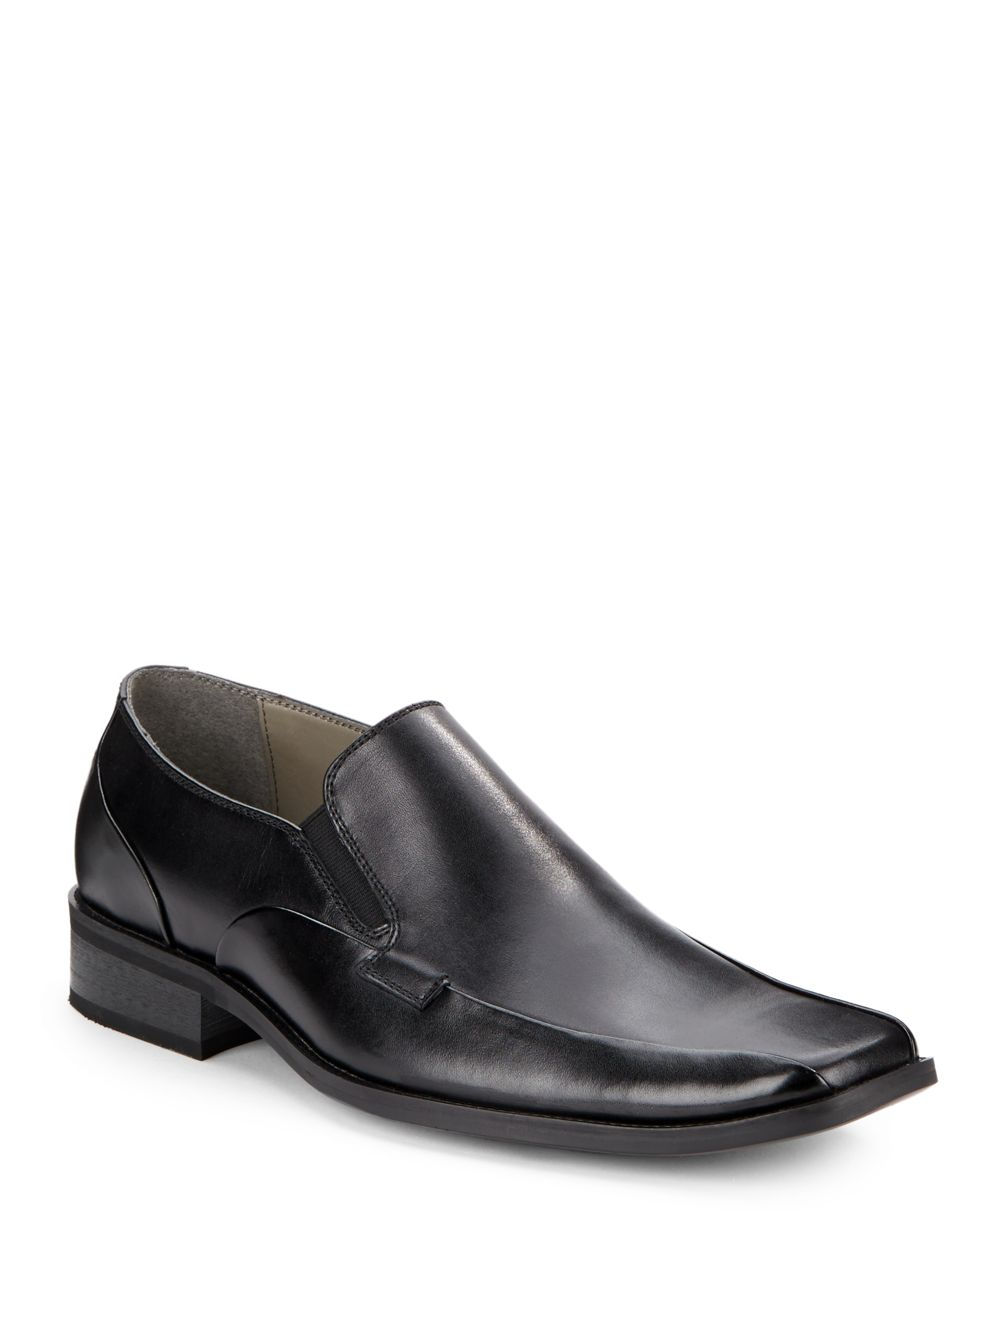 Lyst - Steve Madden Kevlar Leather Square-Toe Loafers in Black for Men